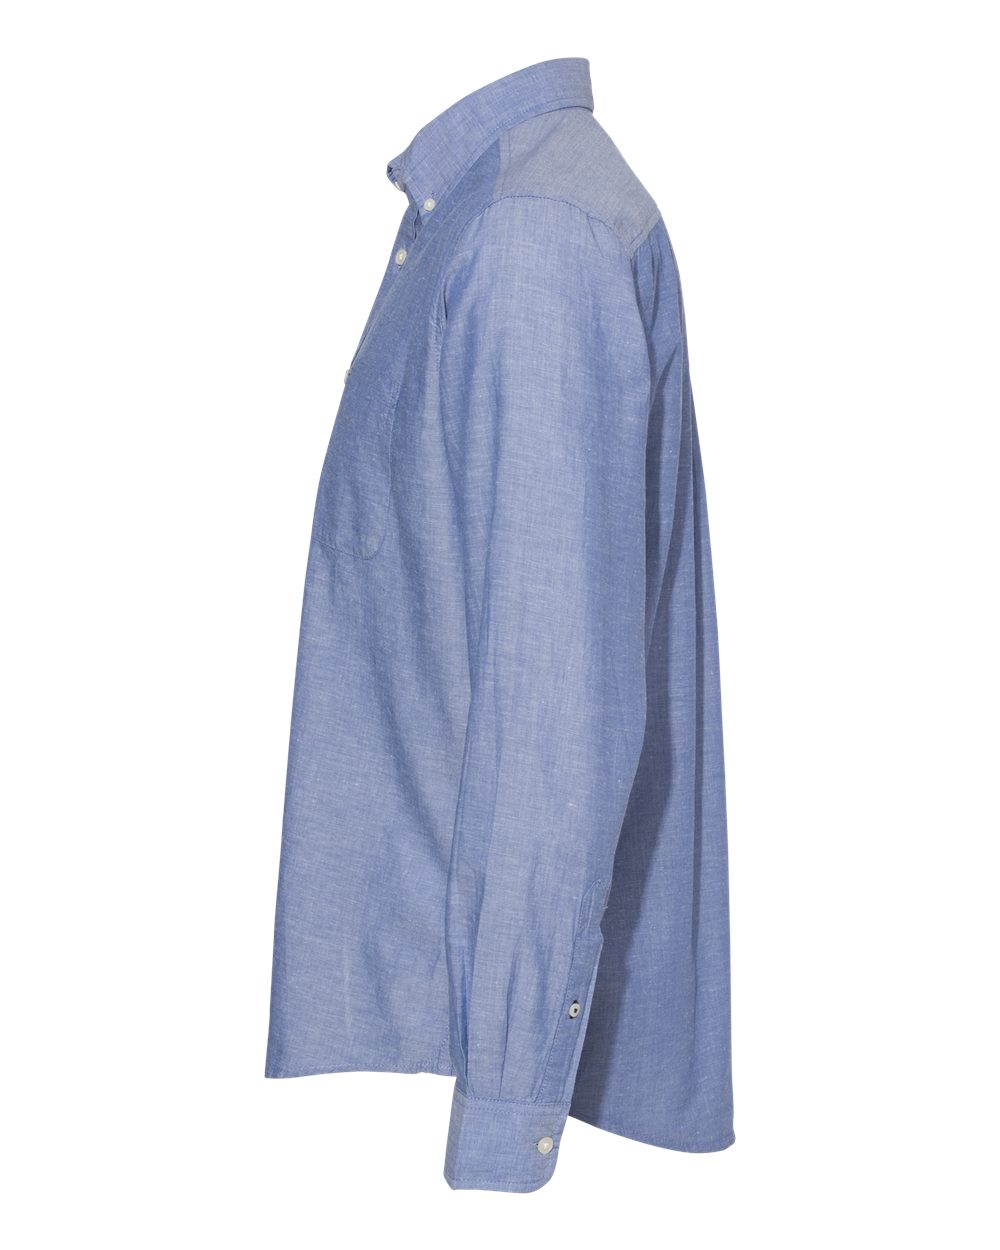 Tommy Hilfiger Cotton/Linen Shirt #13H1910 Mazarine Blue Side